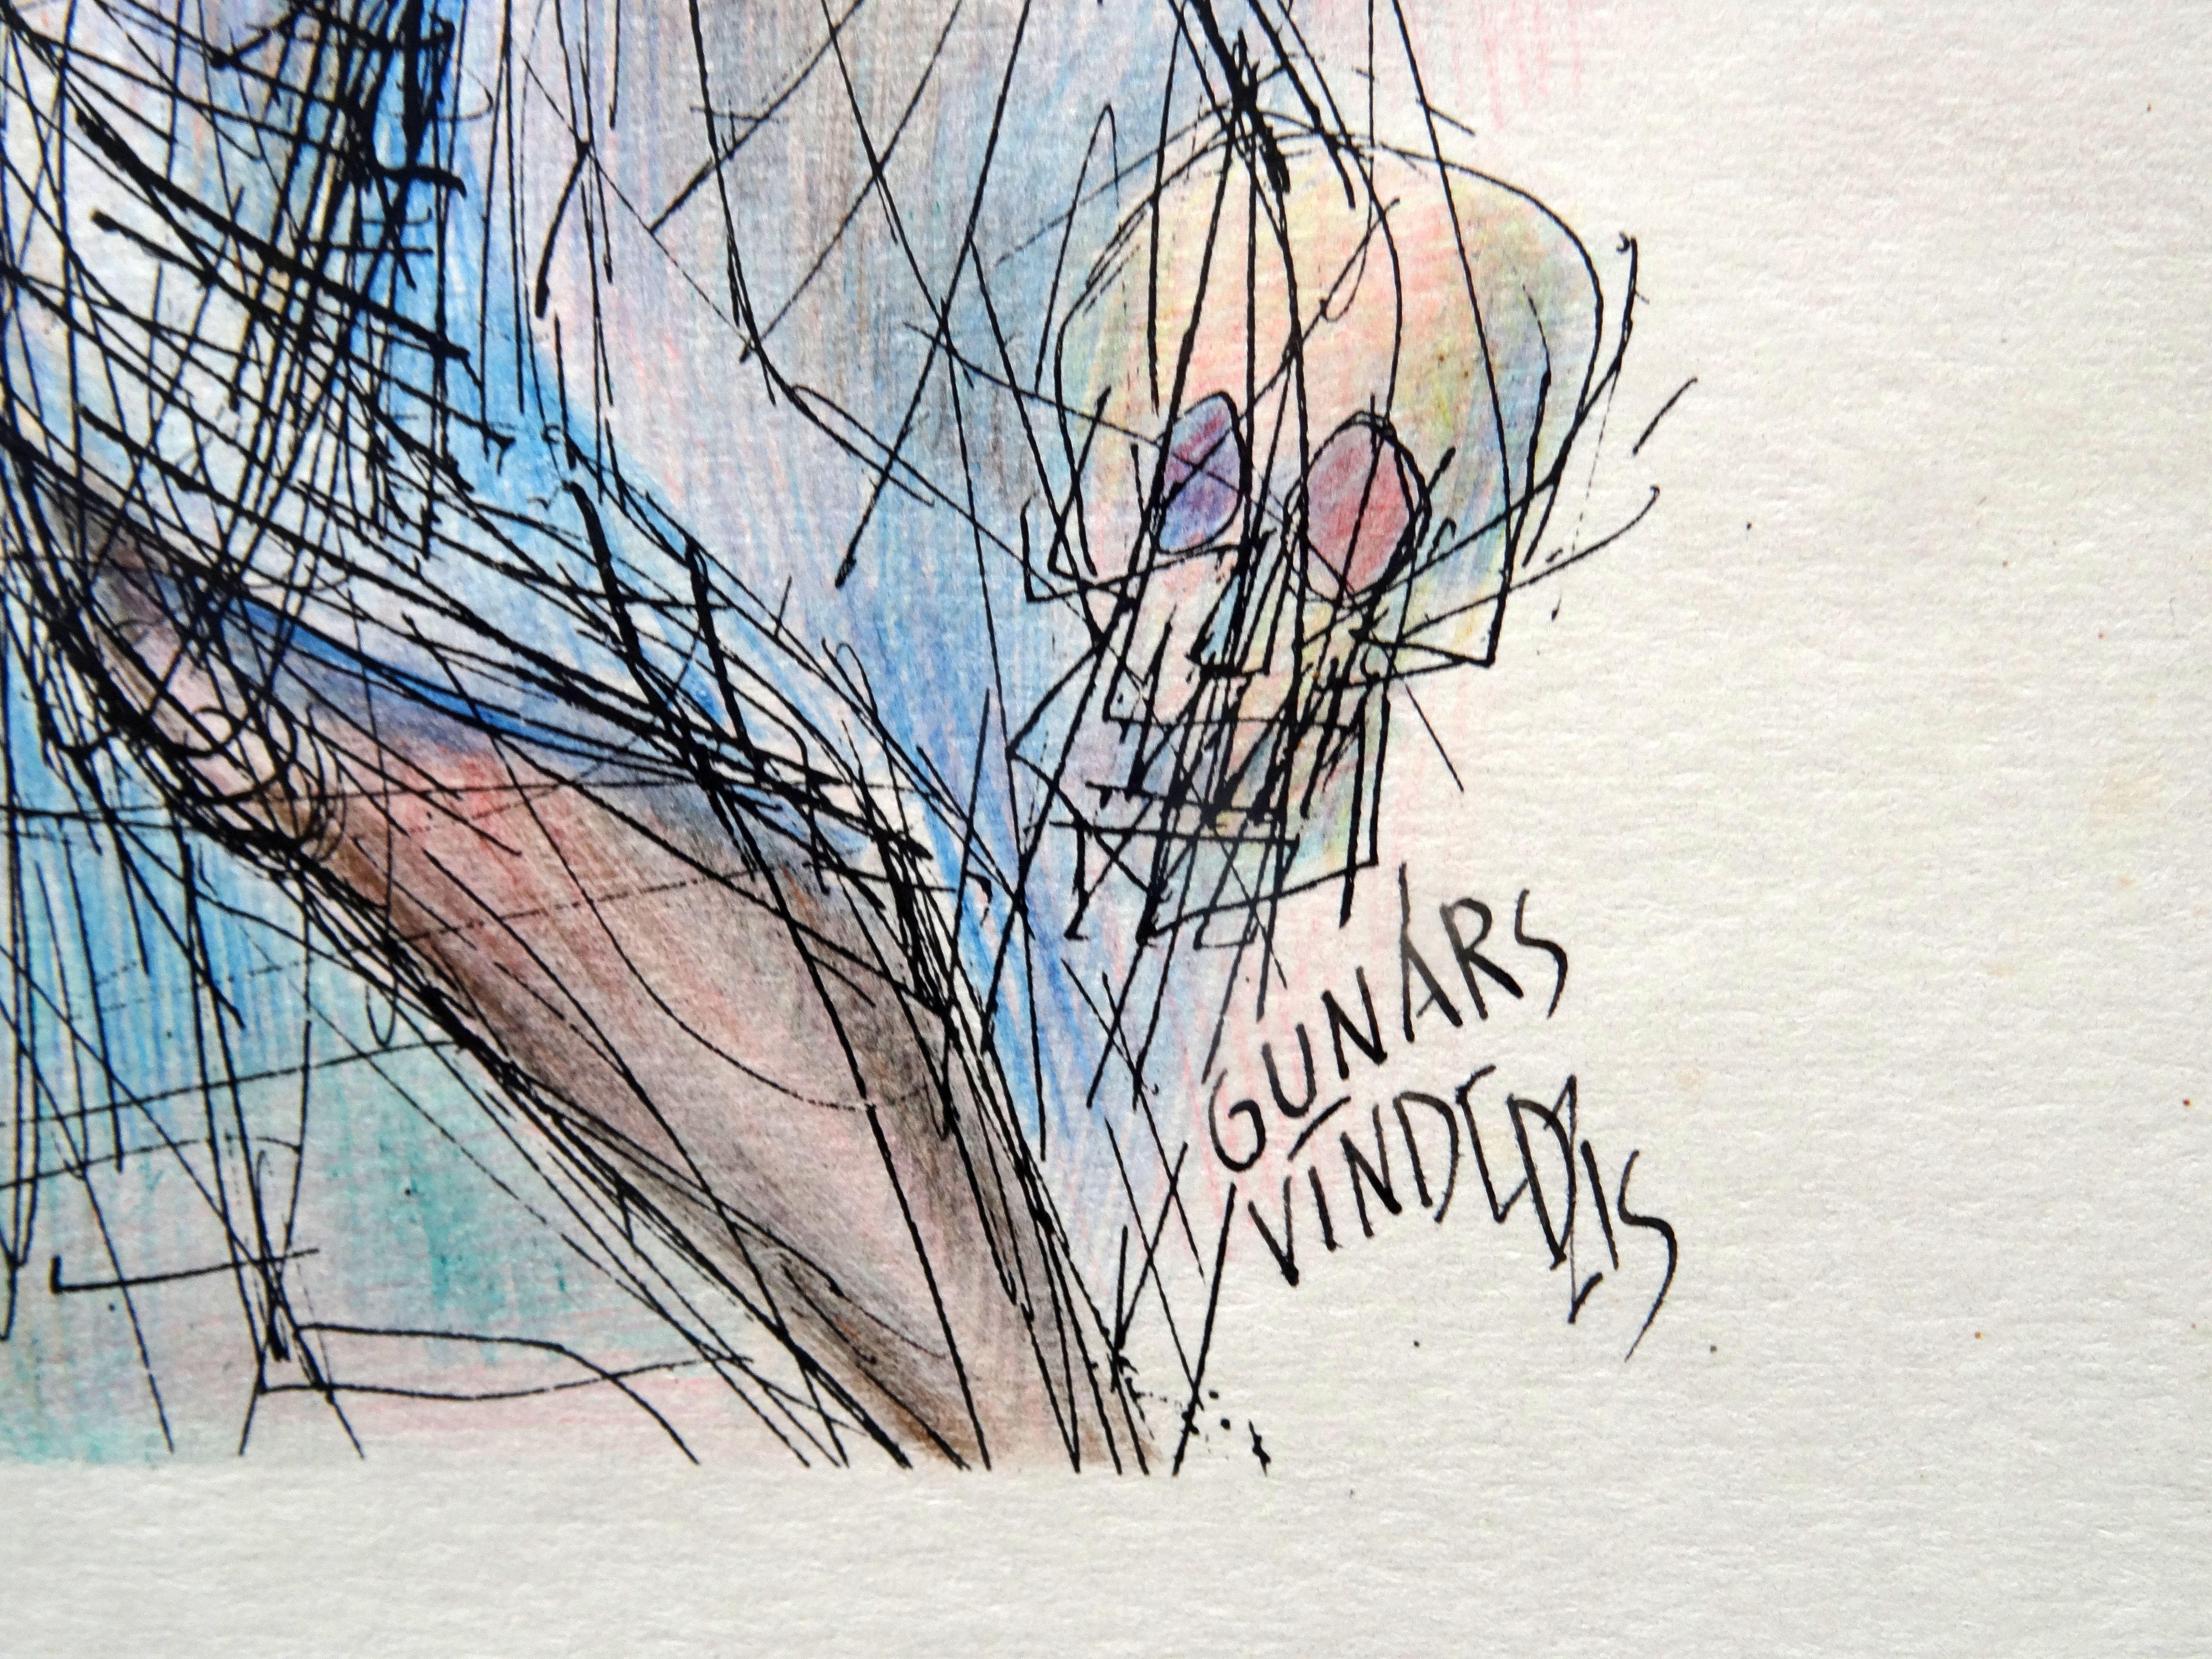 Dance. Paper, ink, colored pencils, 25.5x15 cm - Painting by Gunars Vindedzis 